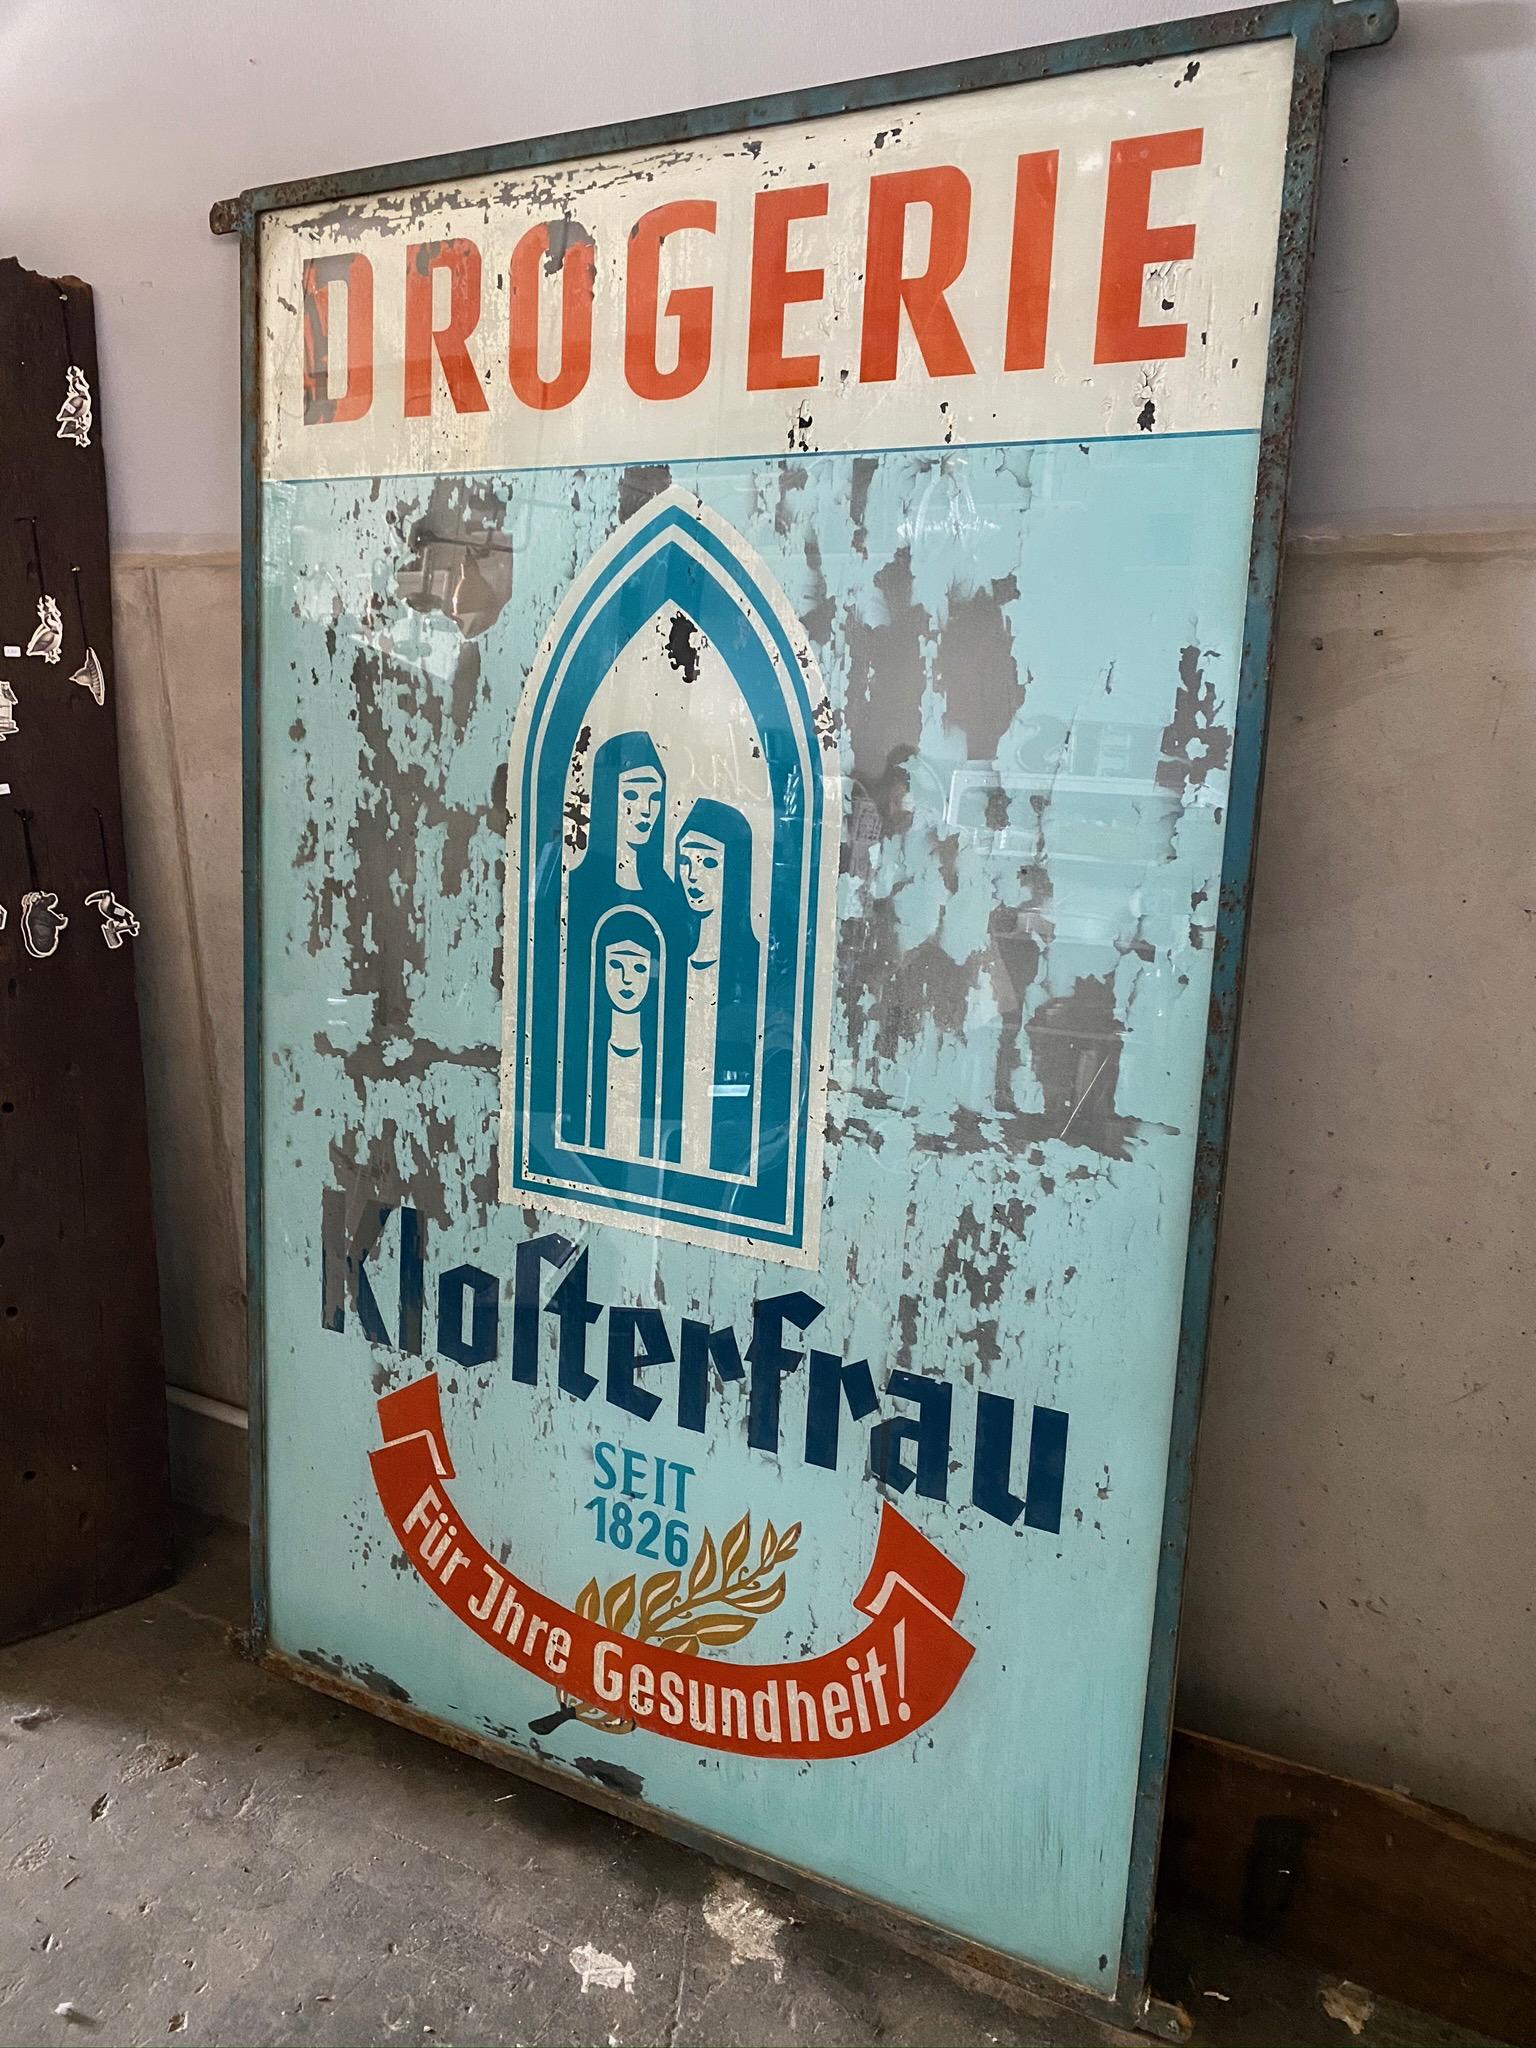 Art Deco Old Drugstore Advertisement for 